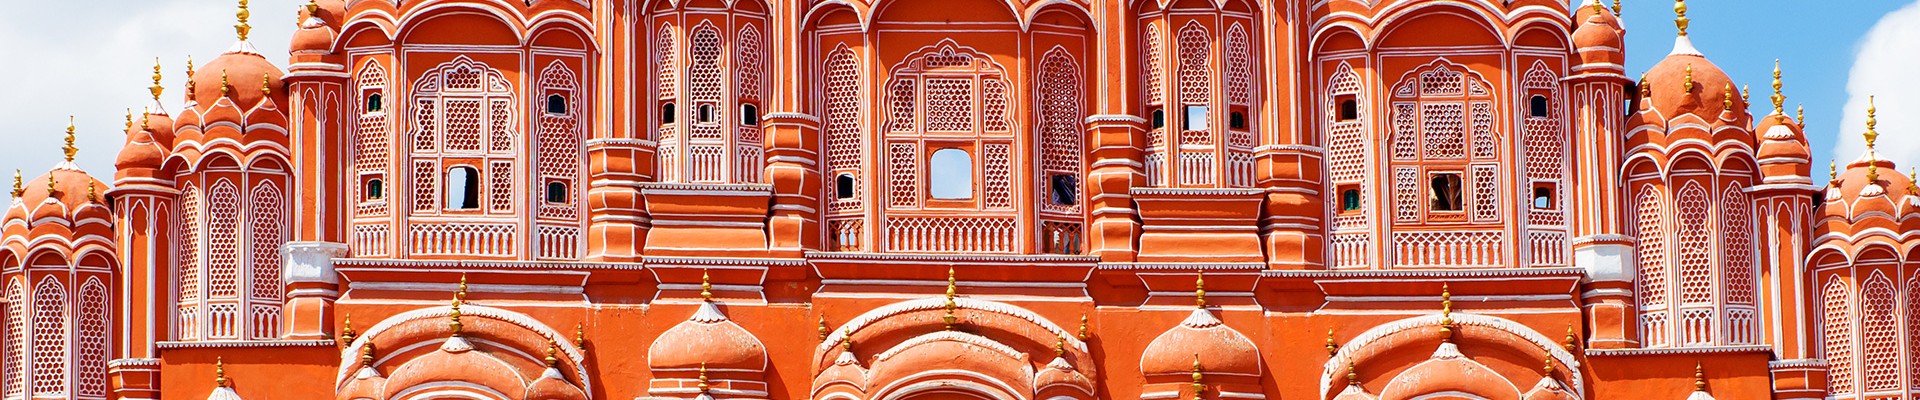 Palace on Wheels tour- India (7 Nights)